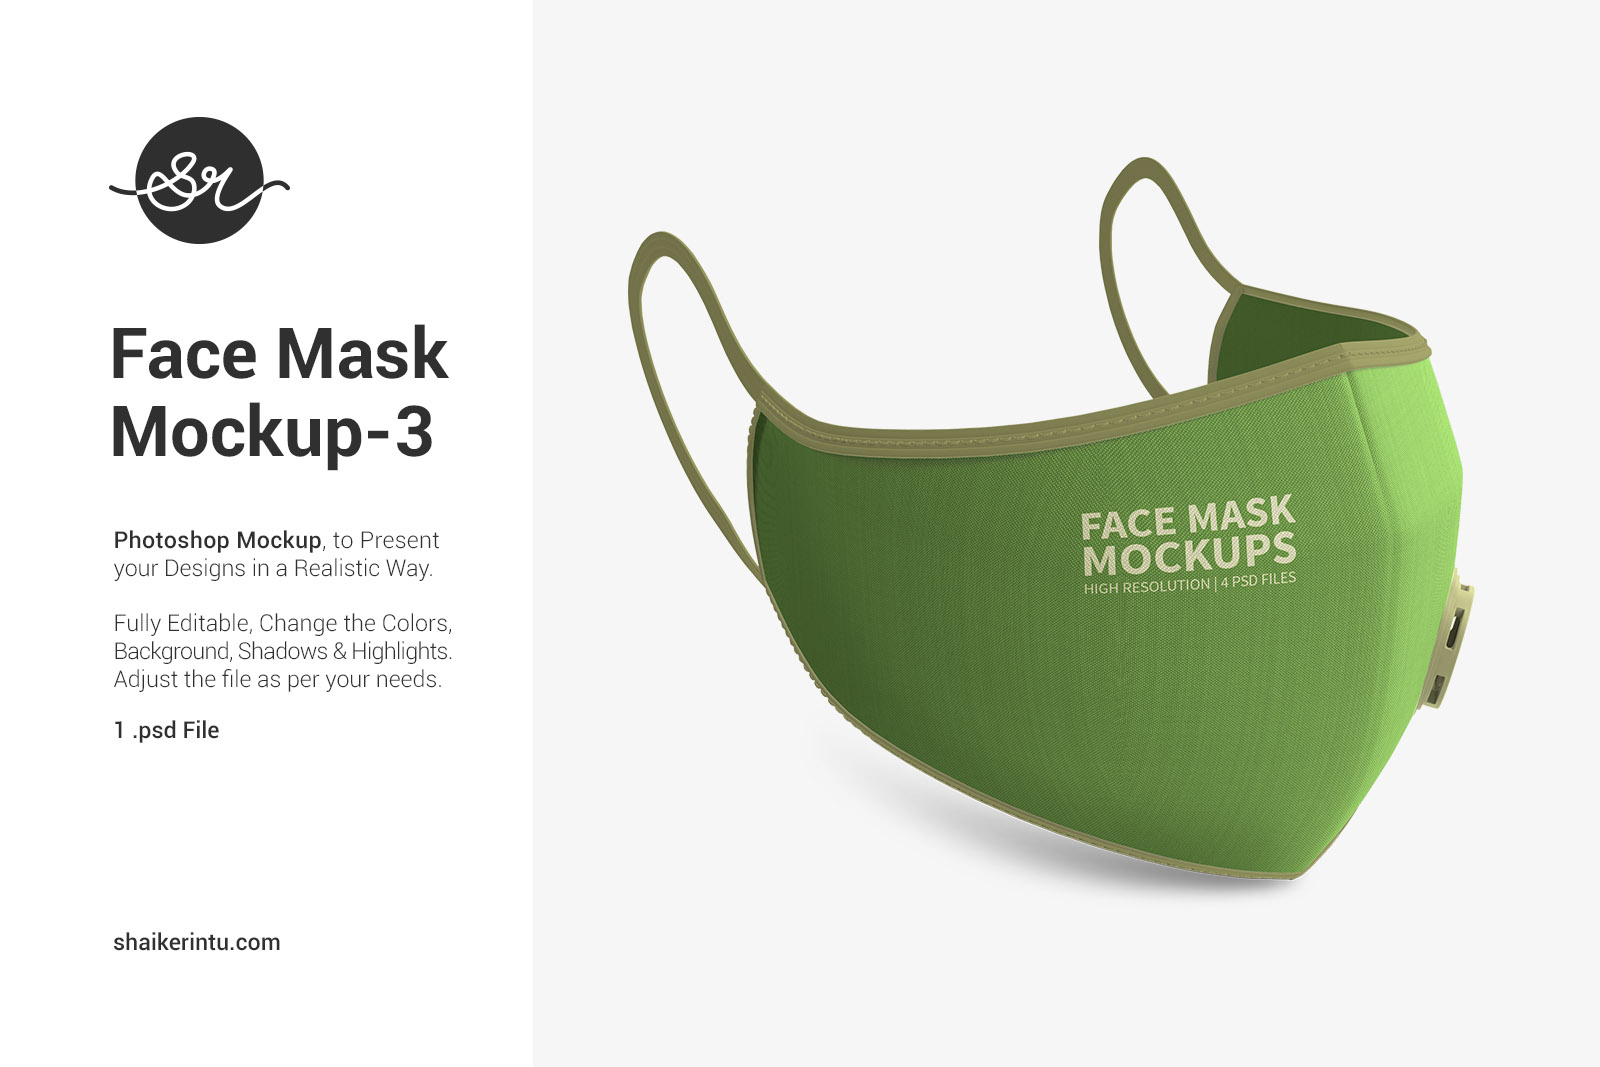 Download Face Mask mockup 3 | shaikerintu.com